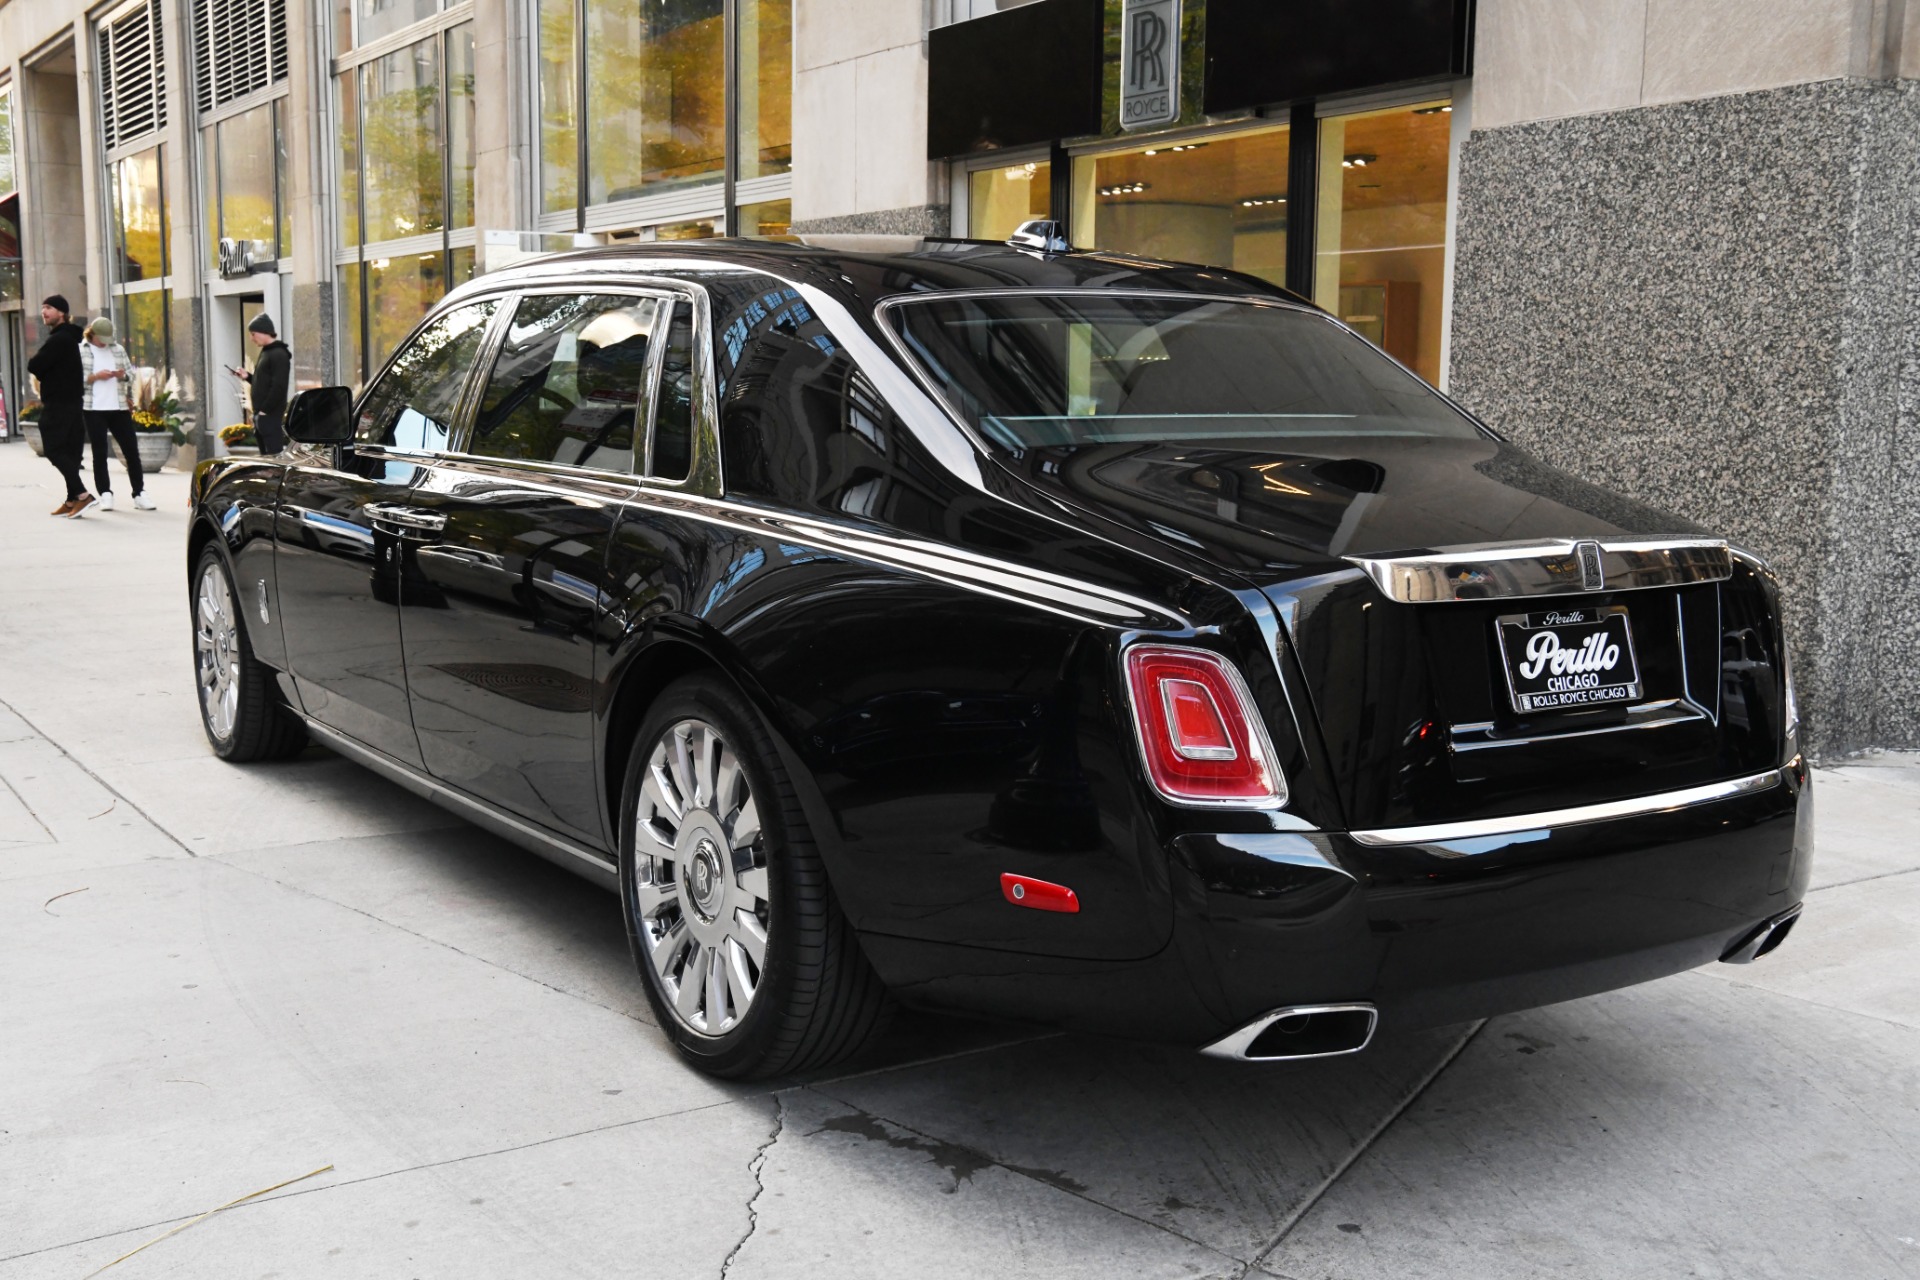 Mua bán xe Rolls Royce Phantom màu đen 082023  Bonbanhcom